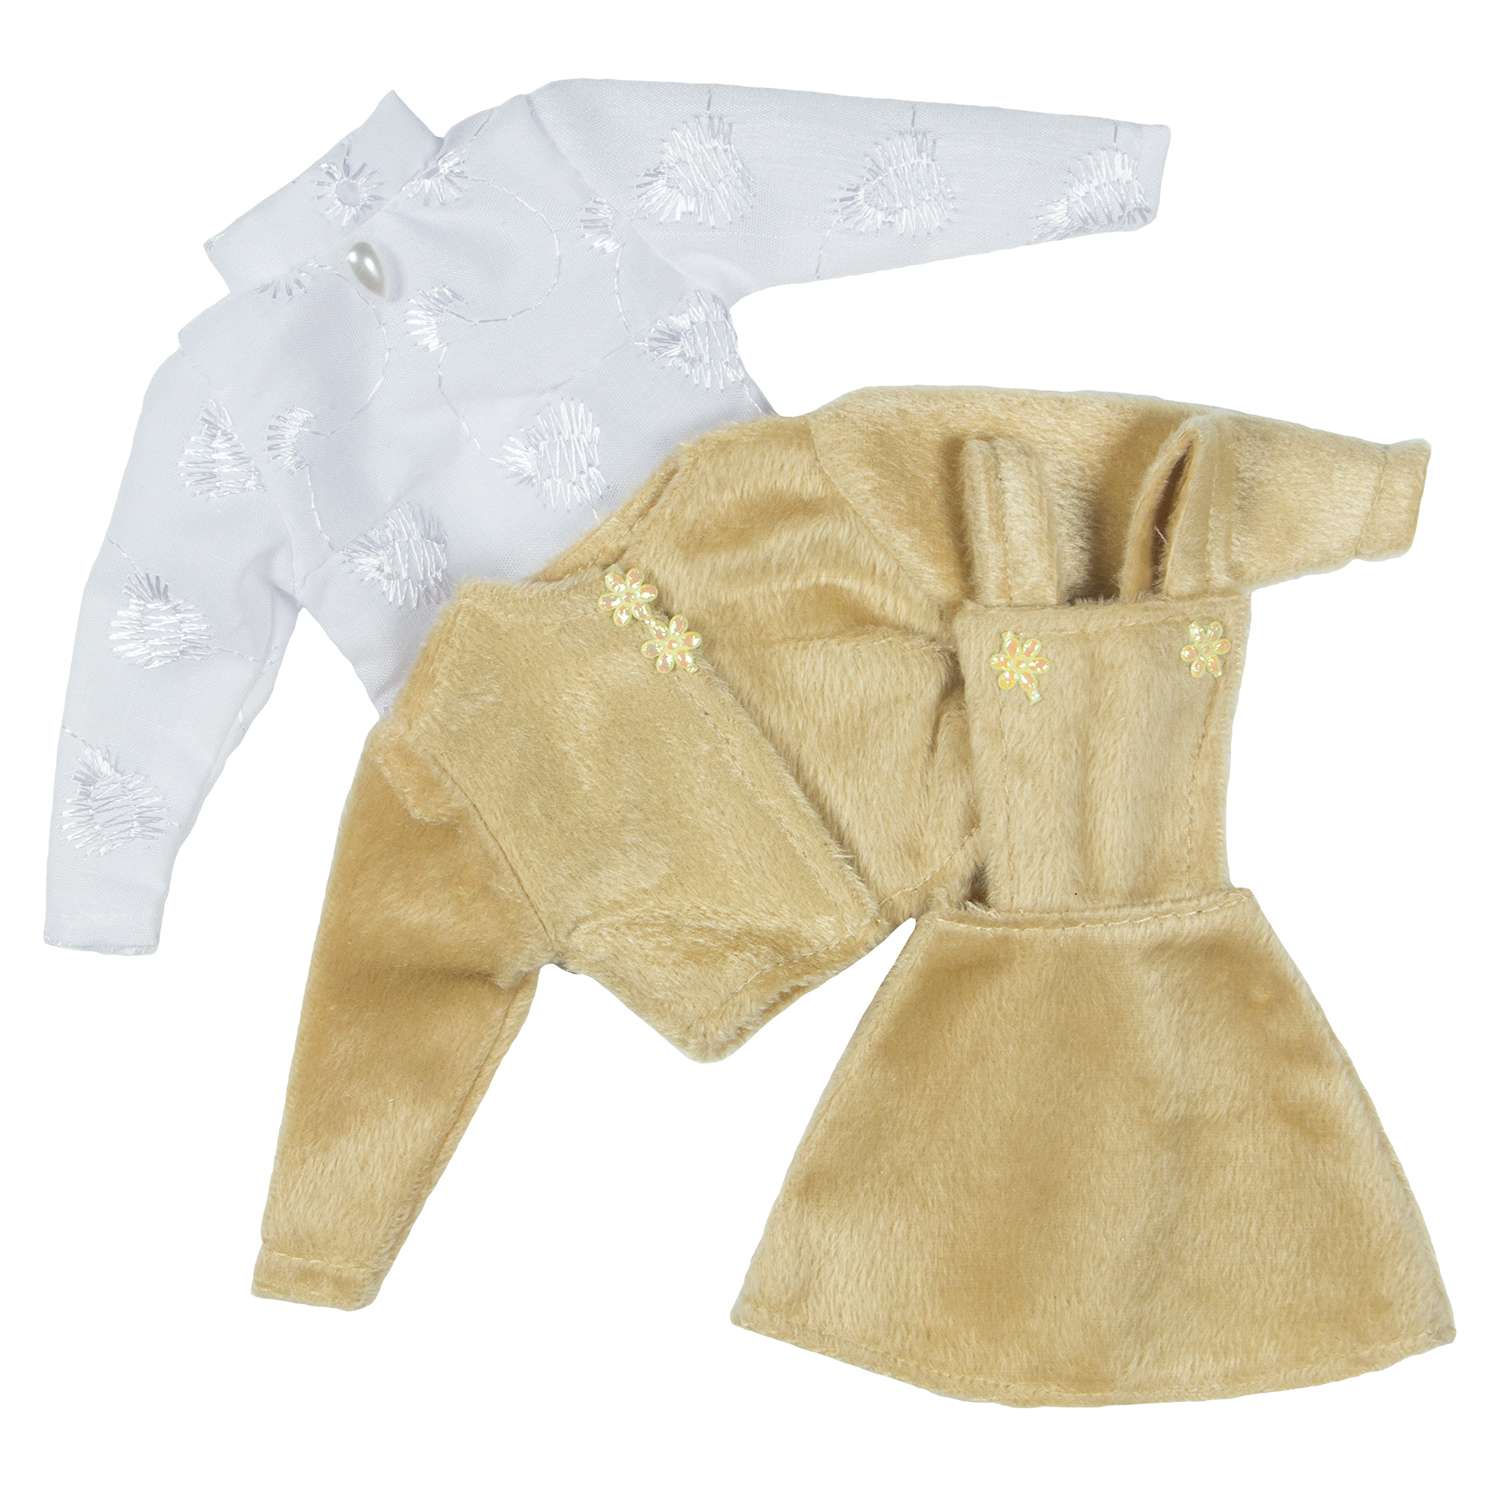 Одежда для кукол Модница 29 см сарафан, блузка и жакет в ассортименте 2010 - фото 3